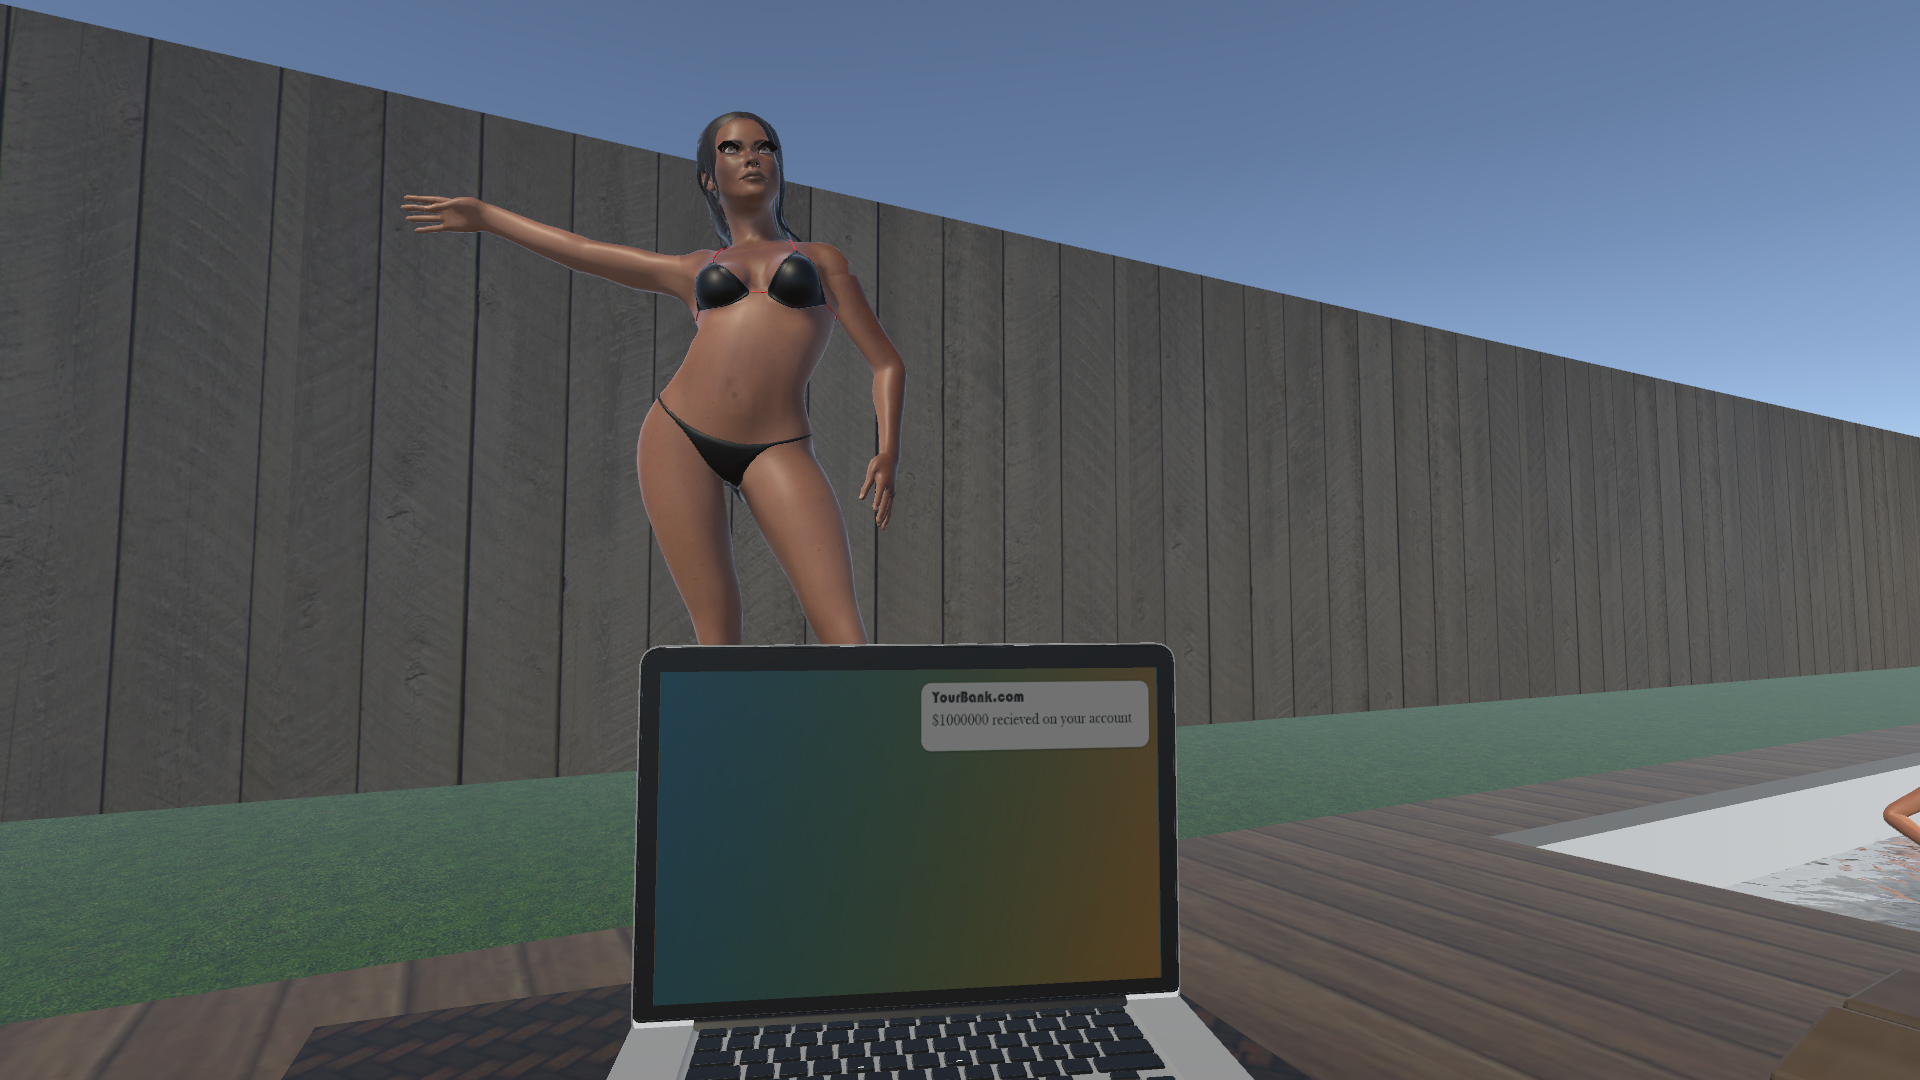 Rich life simulator VR screenshot